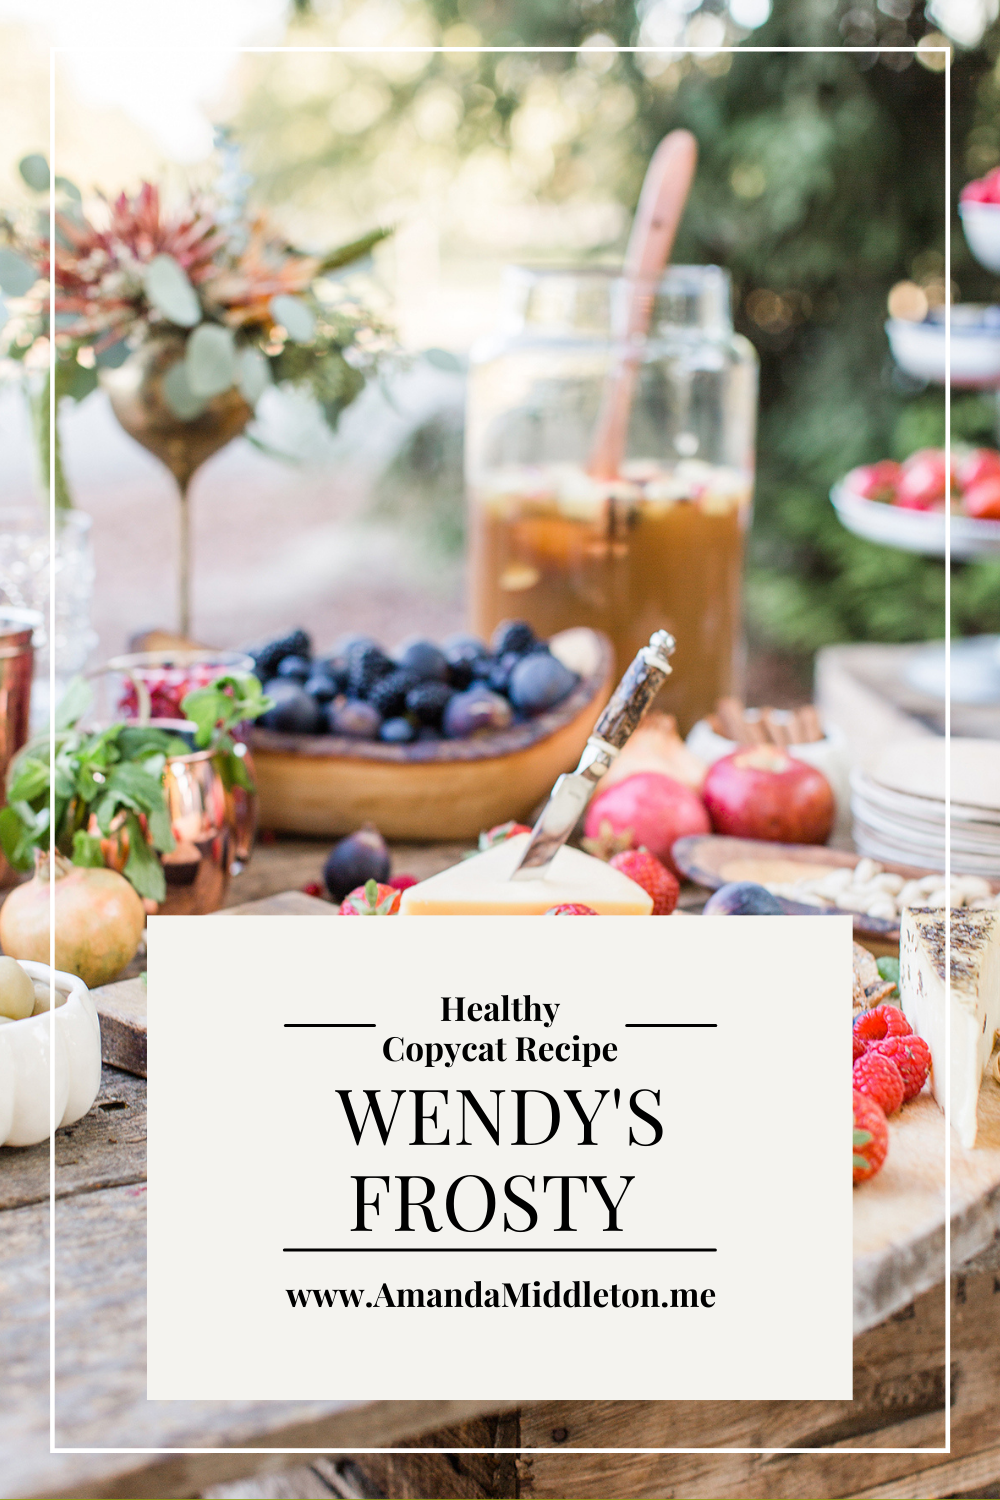 Wendy's Frosty Healthy Copycat Recipe